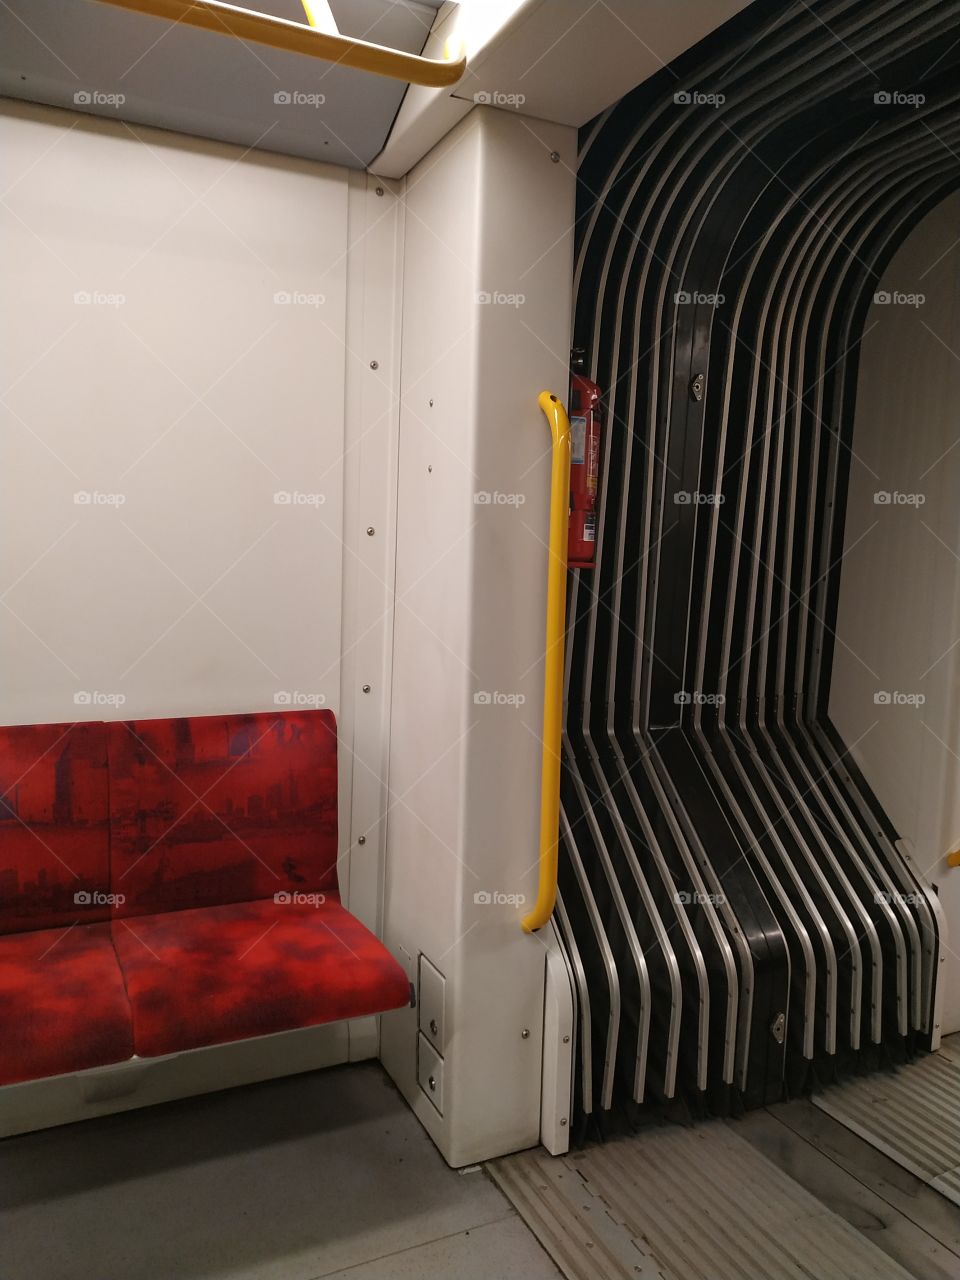 interior of underground train